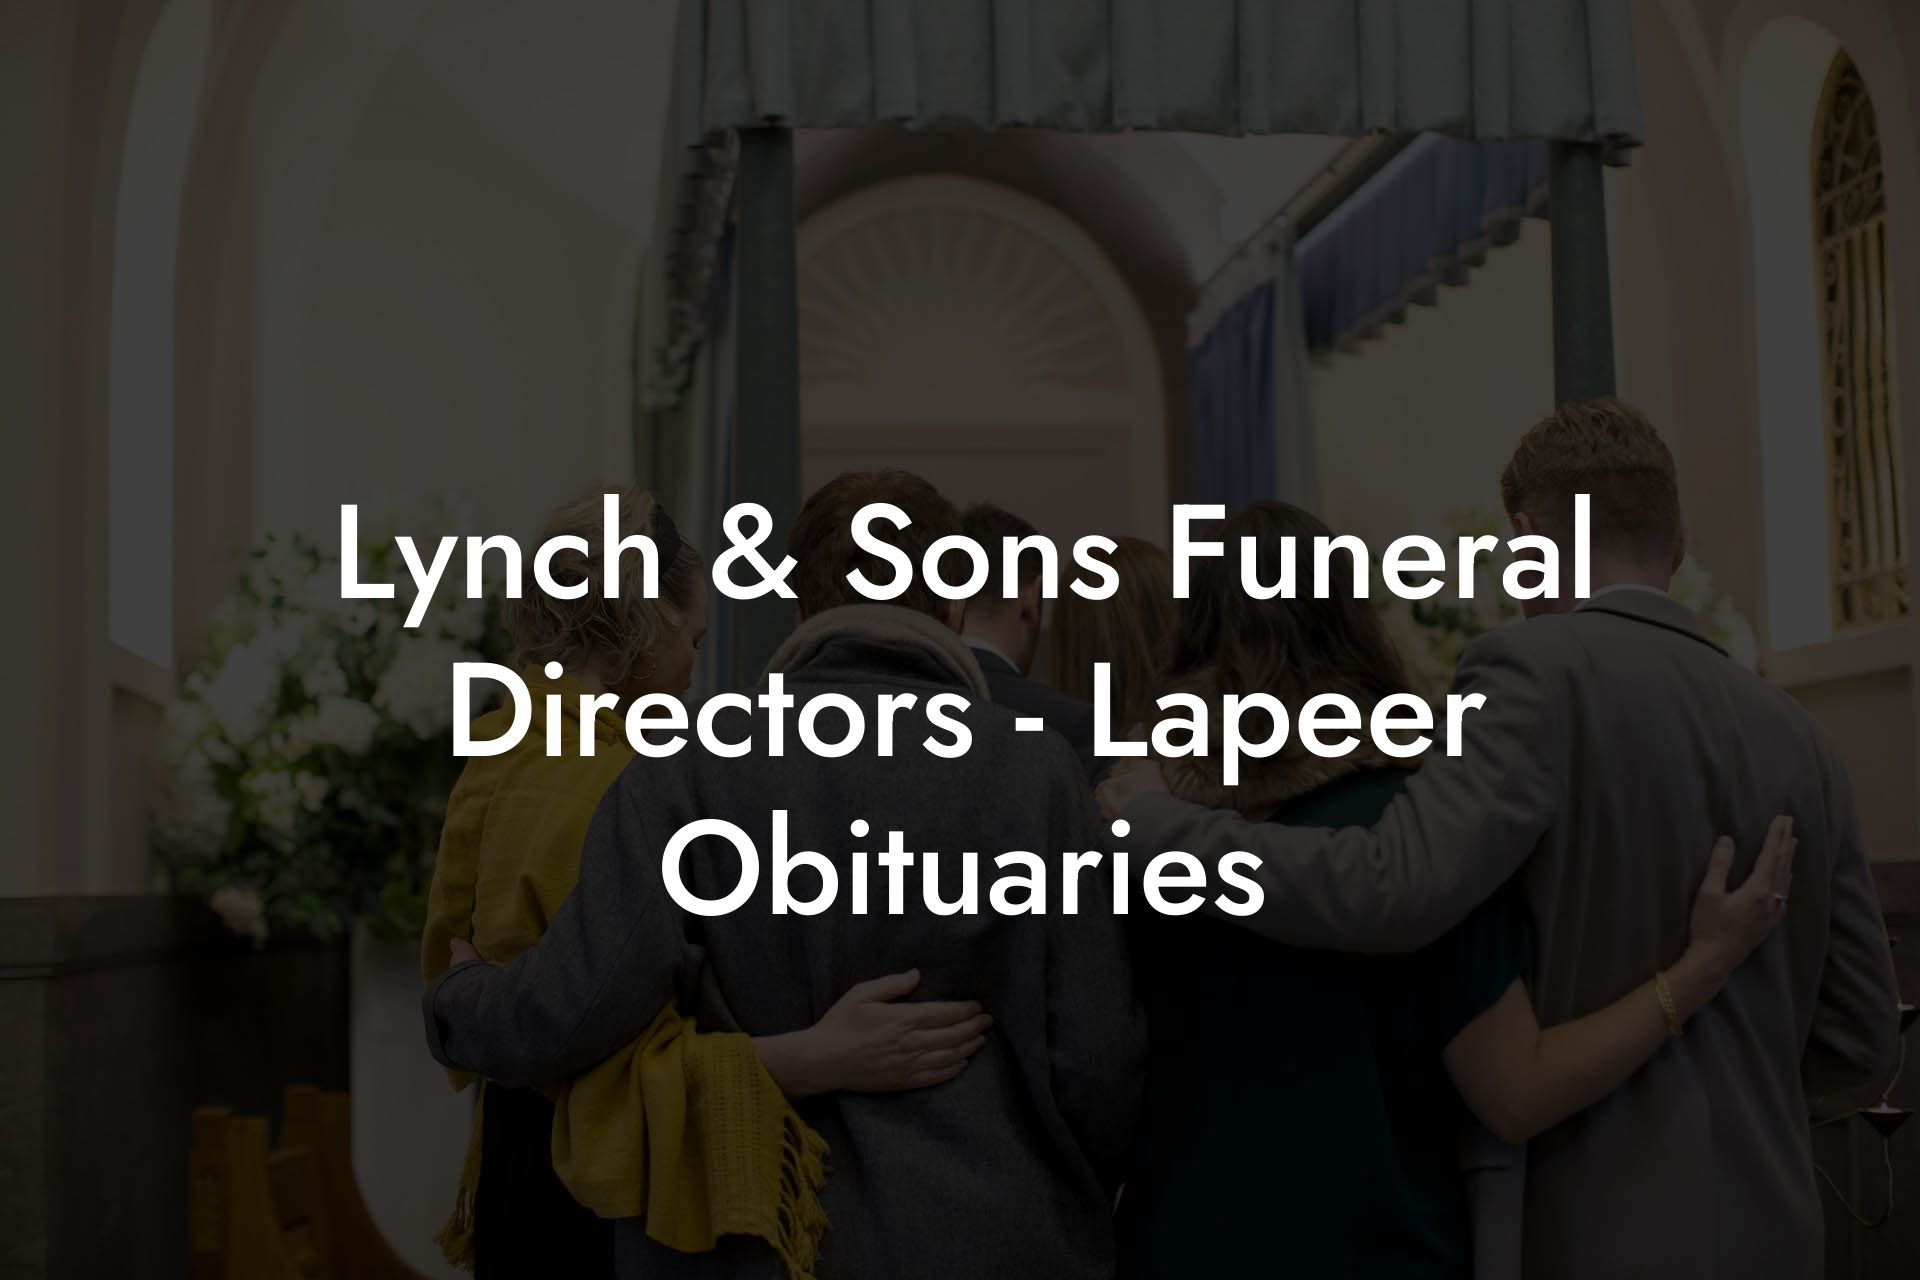 Lynch & Sons Funeral Directors - Lapeer Obituaries